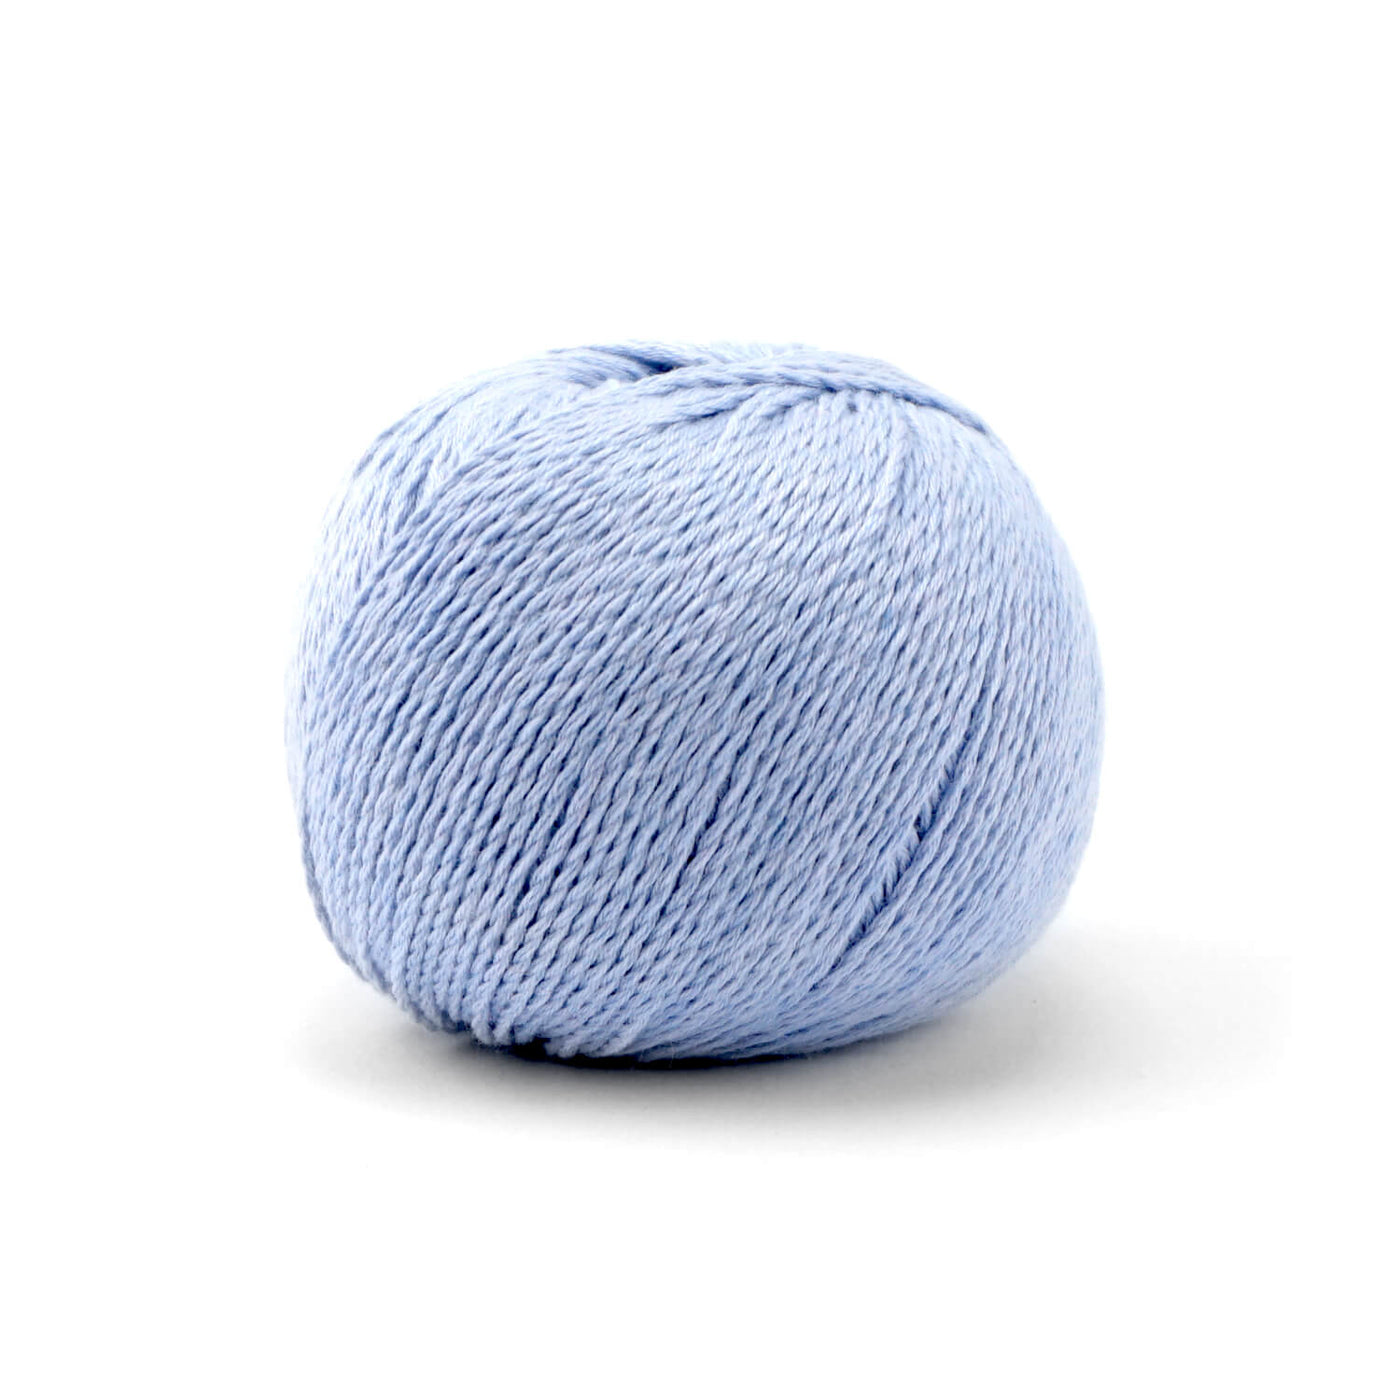 Coarse Wool Star Spun Natural Cotton Yarn - The Filarino